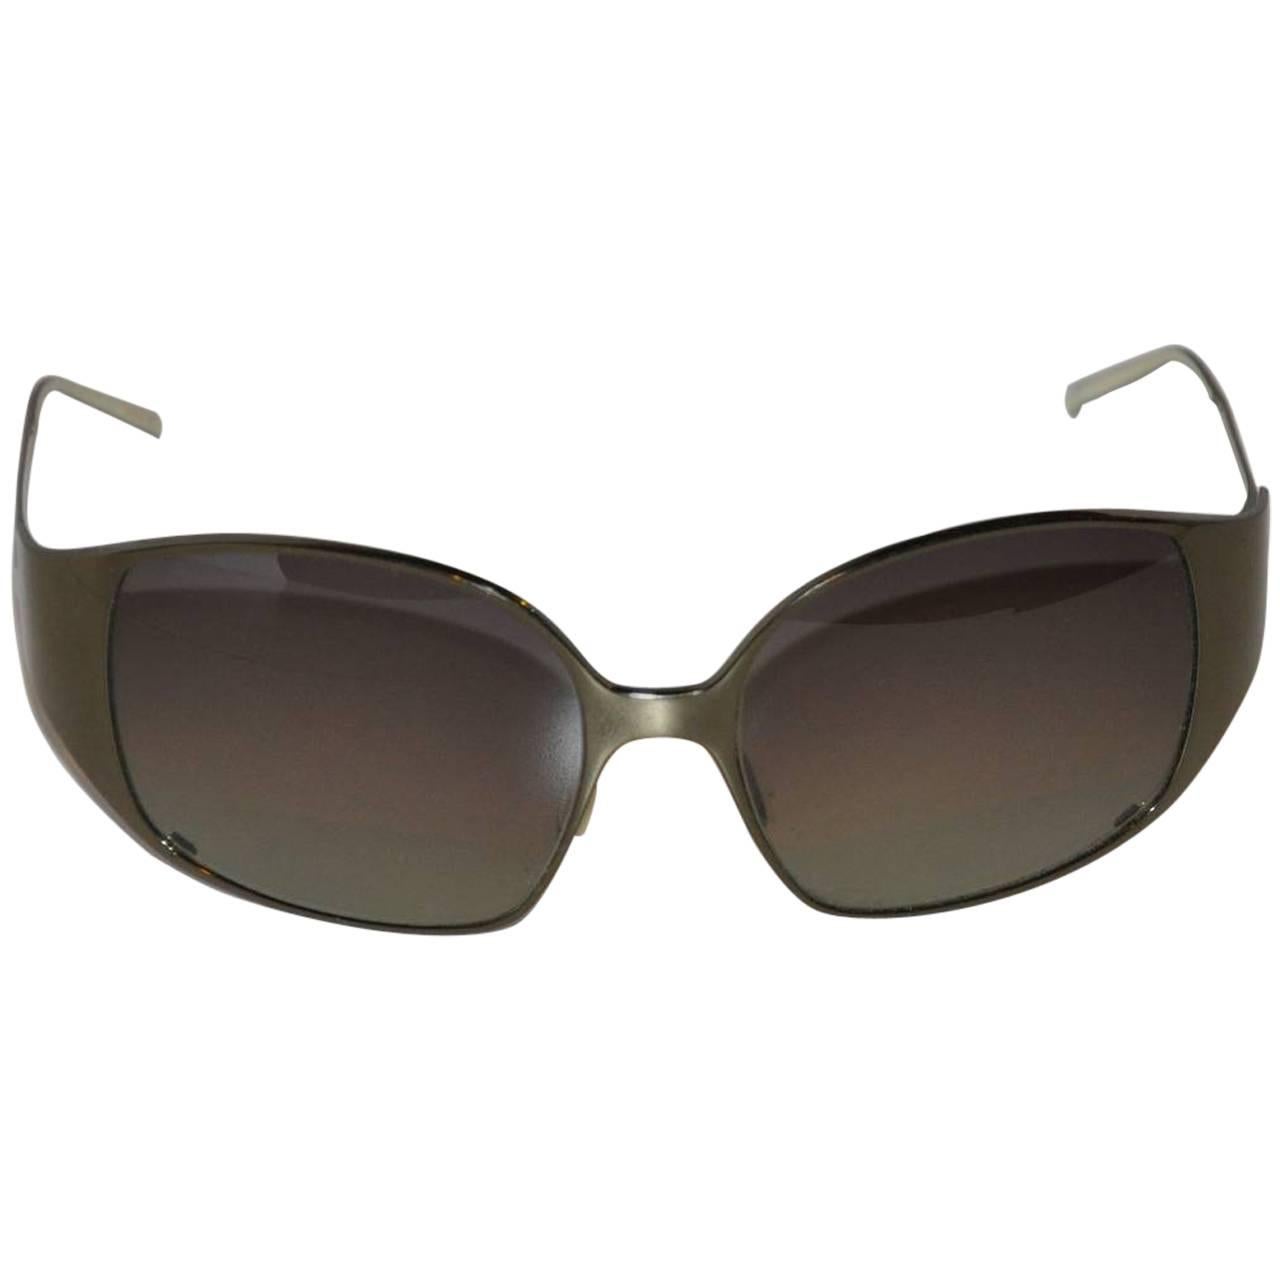 Christian Roth Steel-Gray Titanium Semi-Wrap Sunglasses For Sale